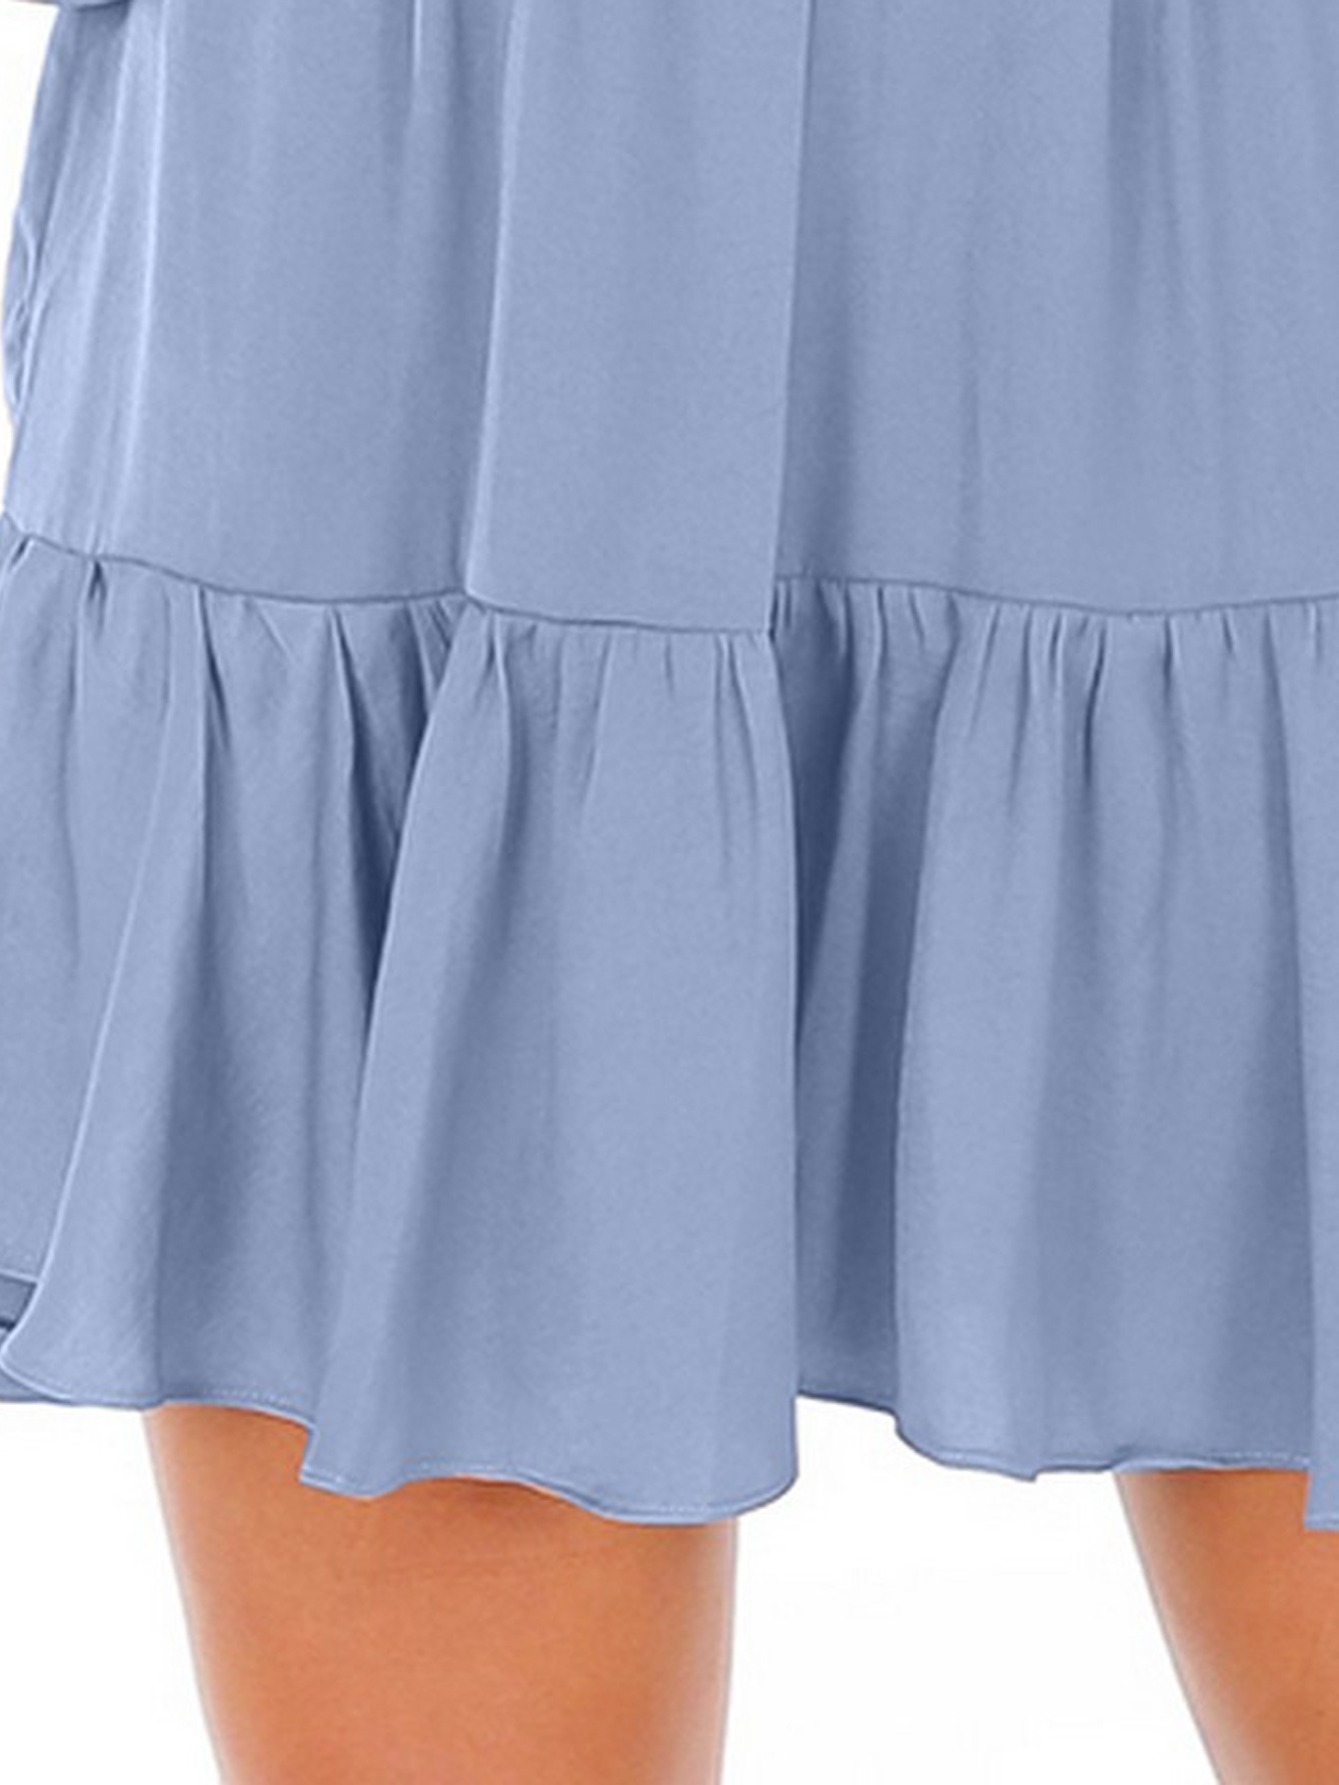 Skirts for Women Women's Summer Empire Waist Ruffle Tiered Pleated